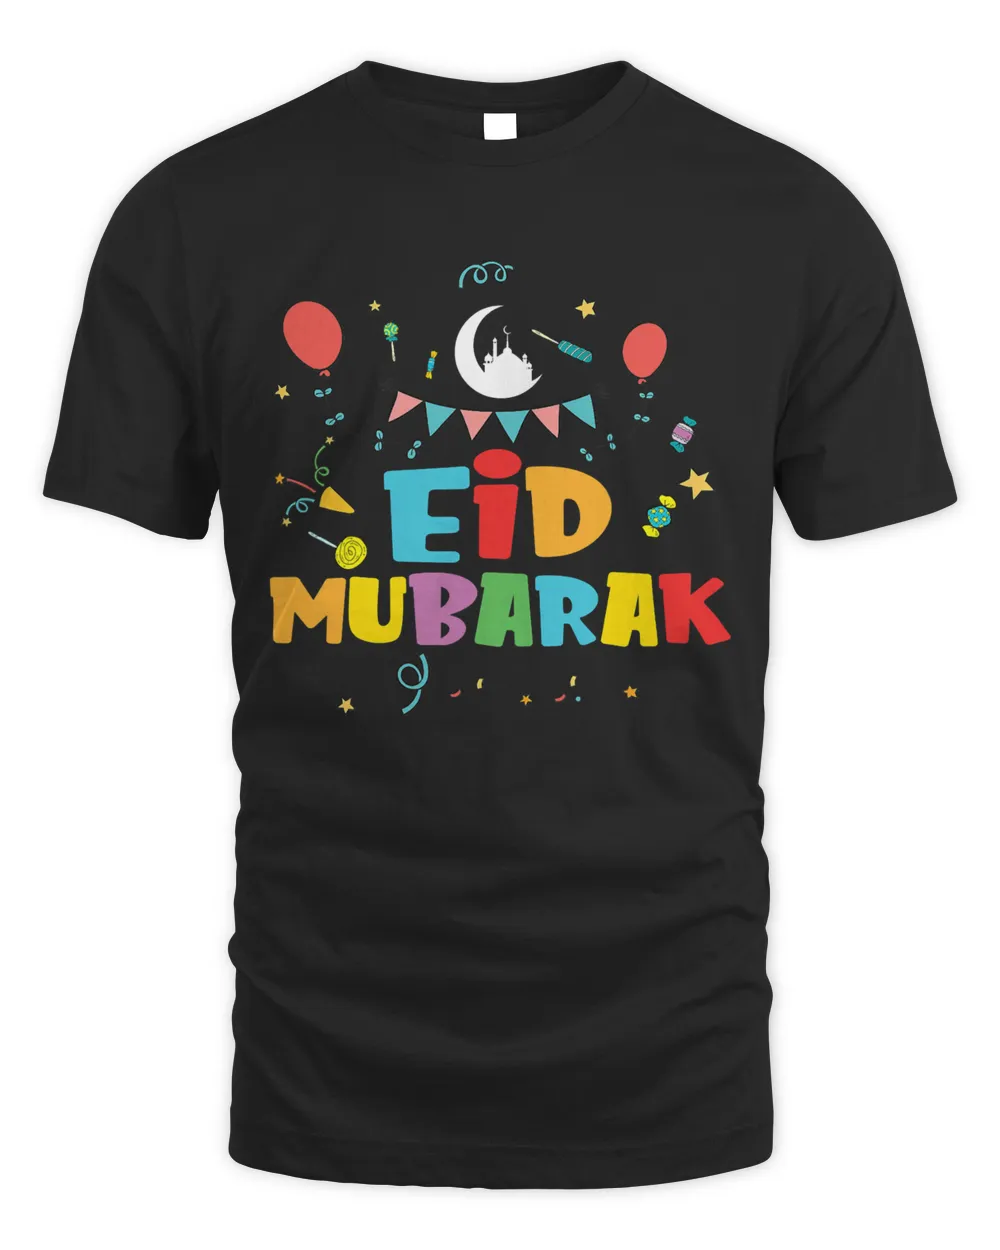 Eid Fitr Muslim Clothing Kids Eid Mubarak T-Shirt